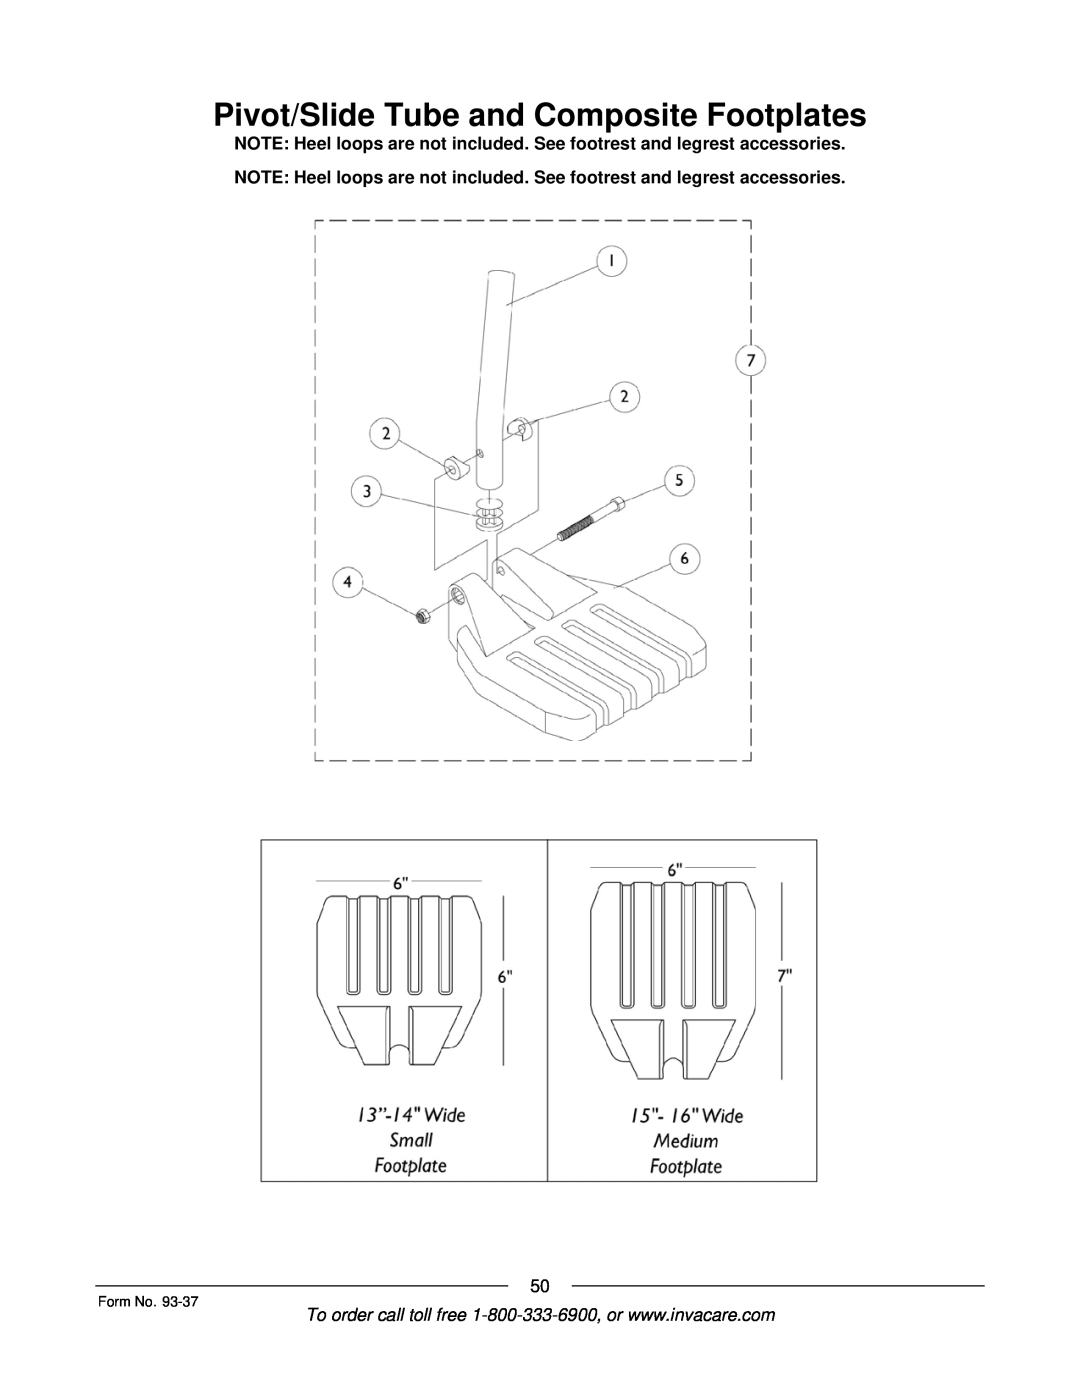 Invacare Power TigerTM manual Pivot/Slide Tube and Composite Footplates, Form No 